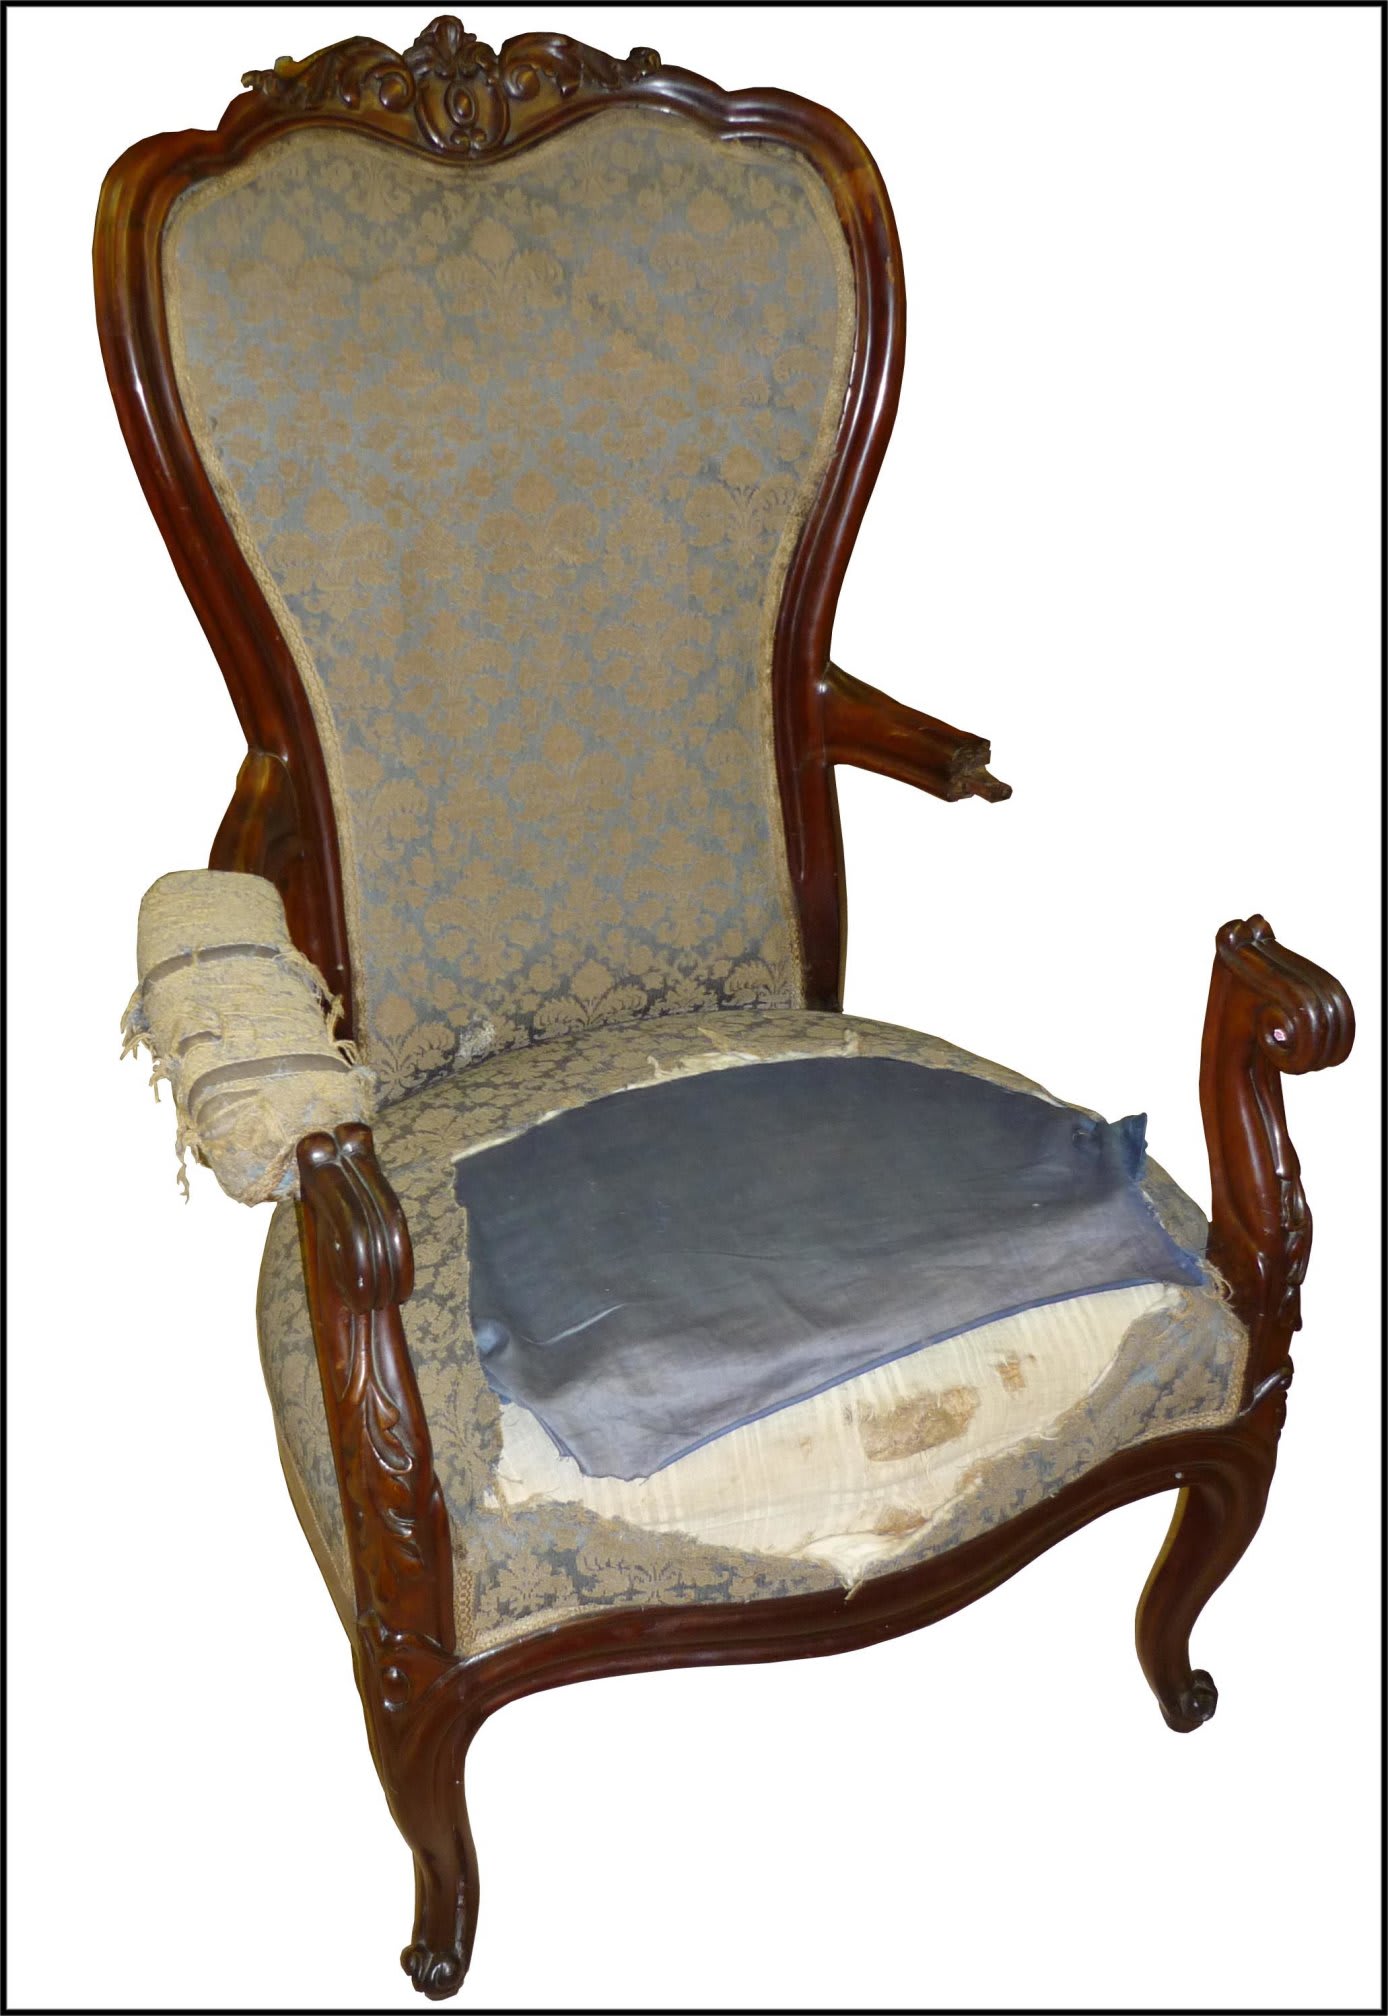 Coopers Of ilkley Restoration Ltd Furniture Repair & Restoration Ilkley 01943 608020